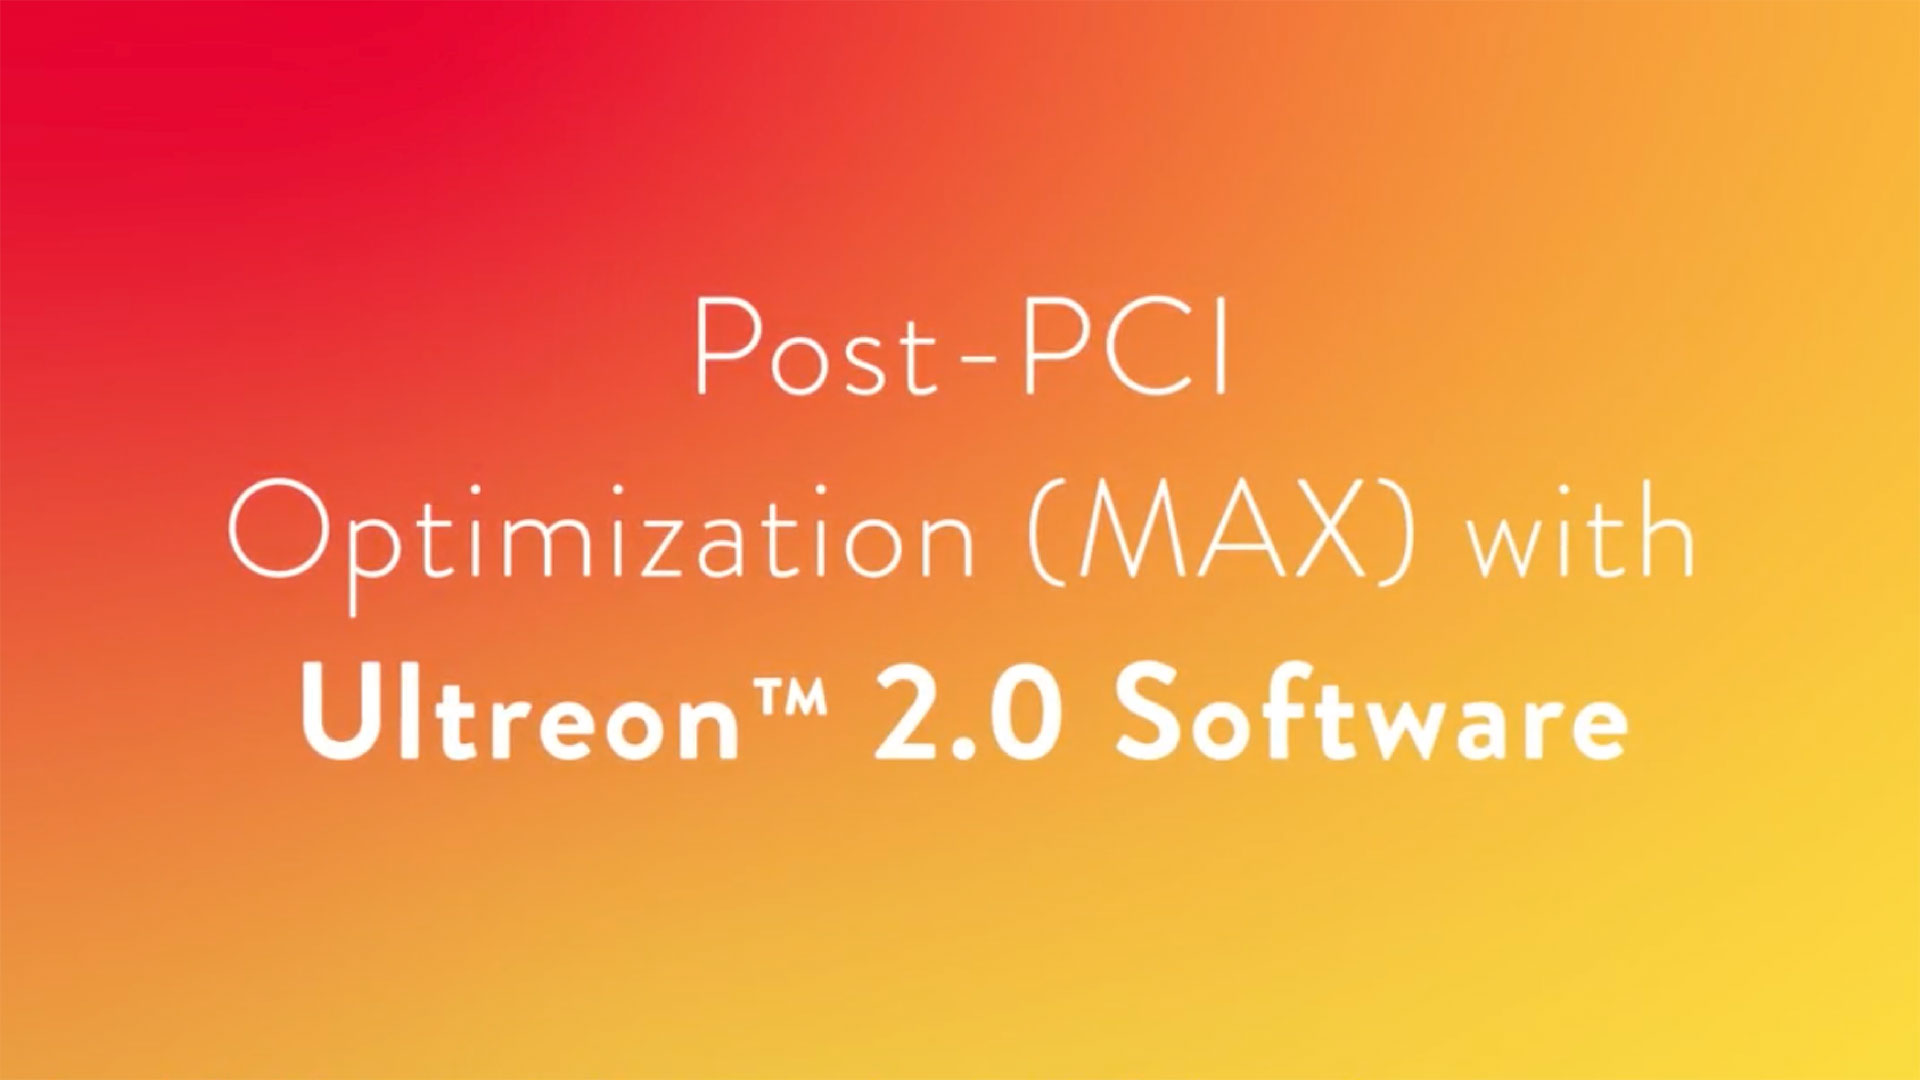 Post PCI optimization